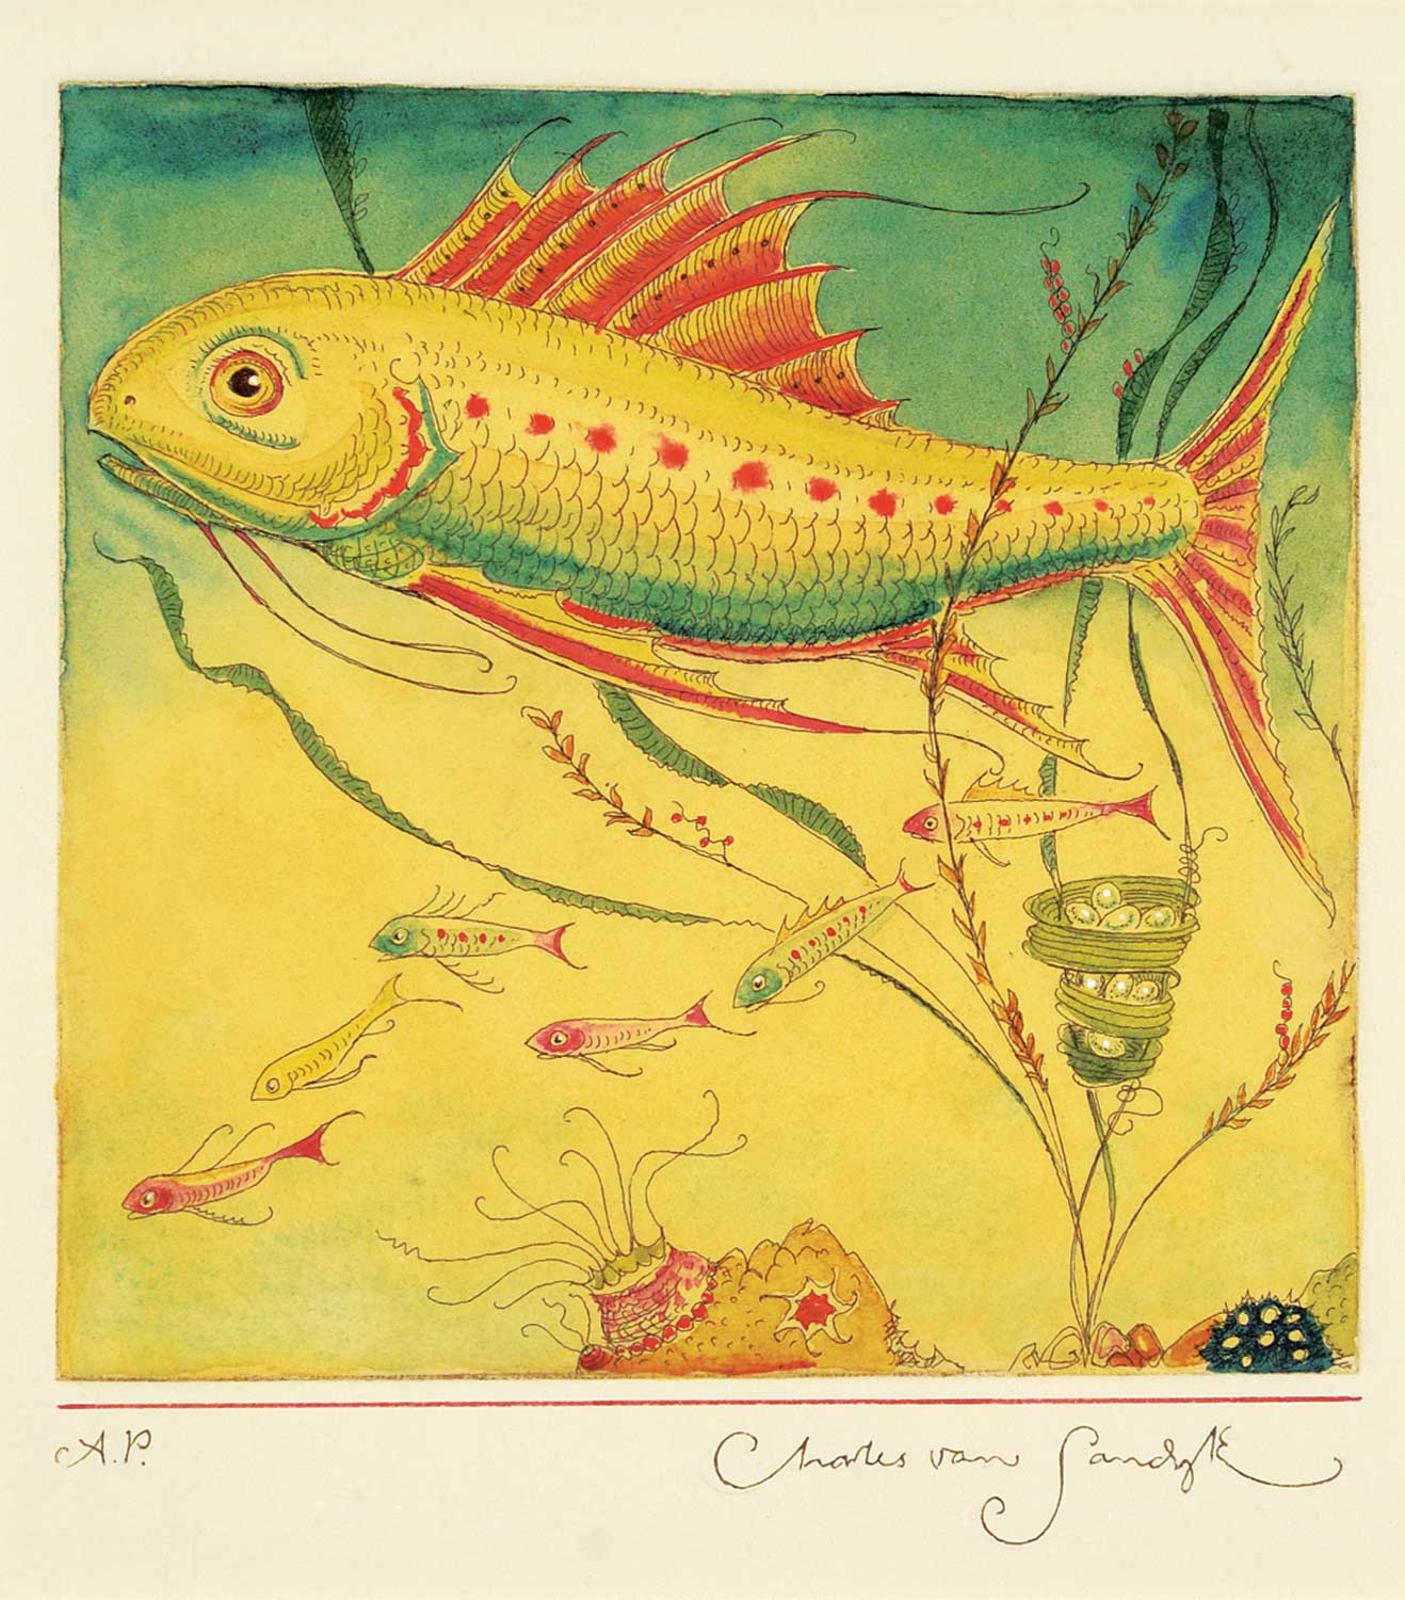 Charles van Sandwyk (1966) - Three Generations [Fish, Egg and Fry]  #A.P.